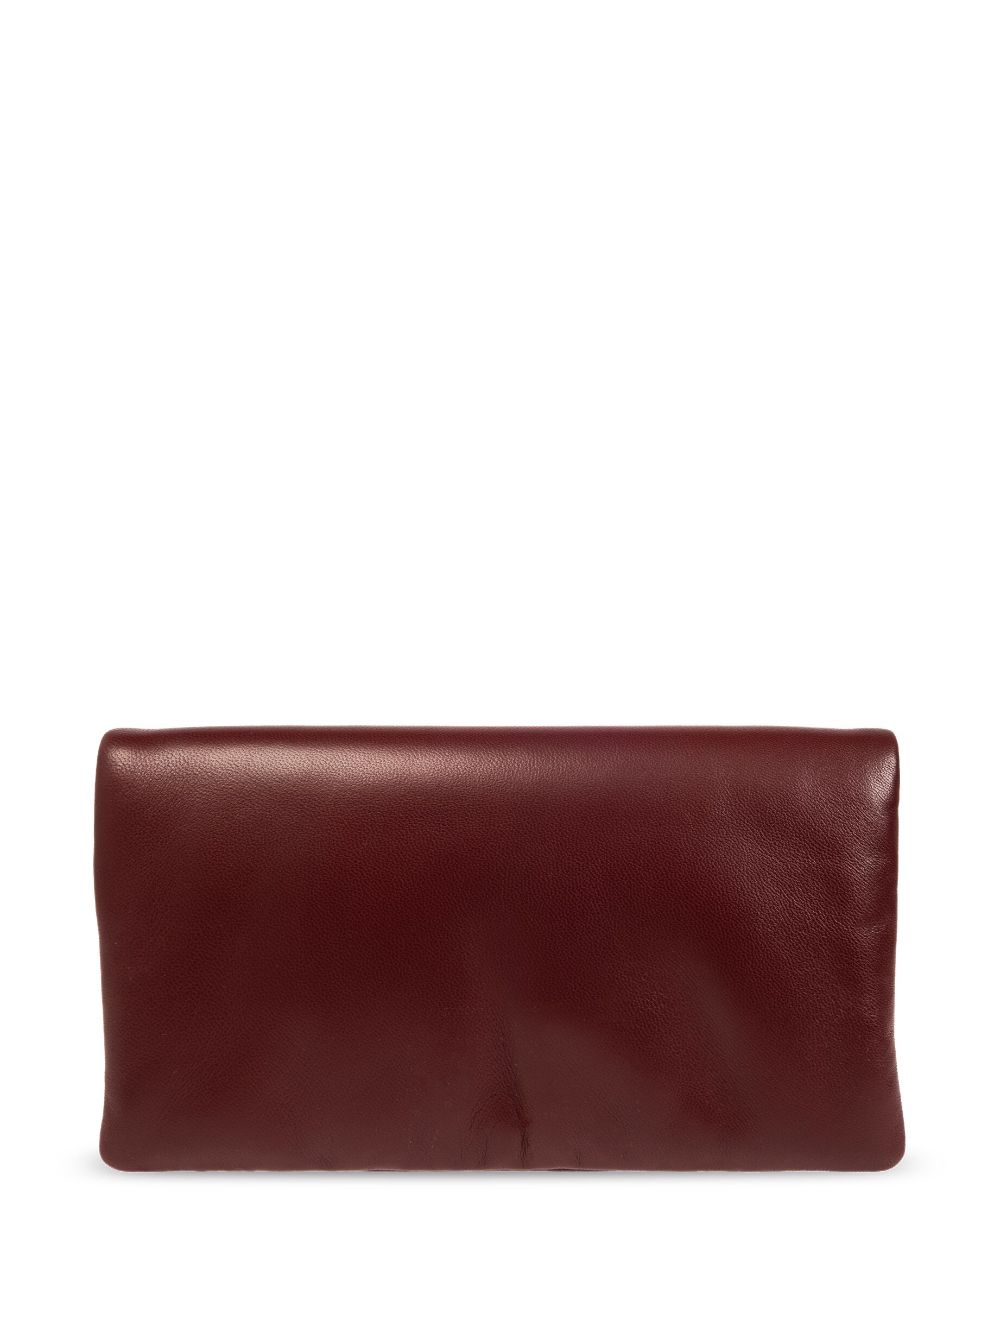 Saint Laurent large Calypso leather wallet - Rood